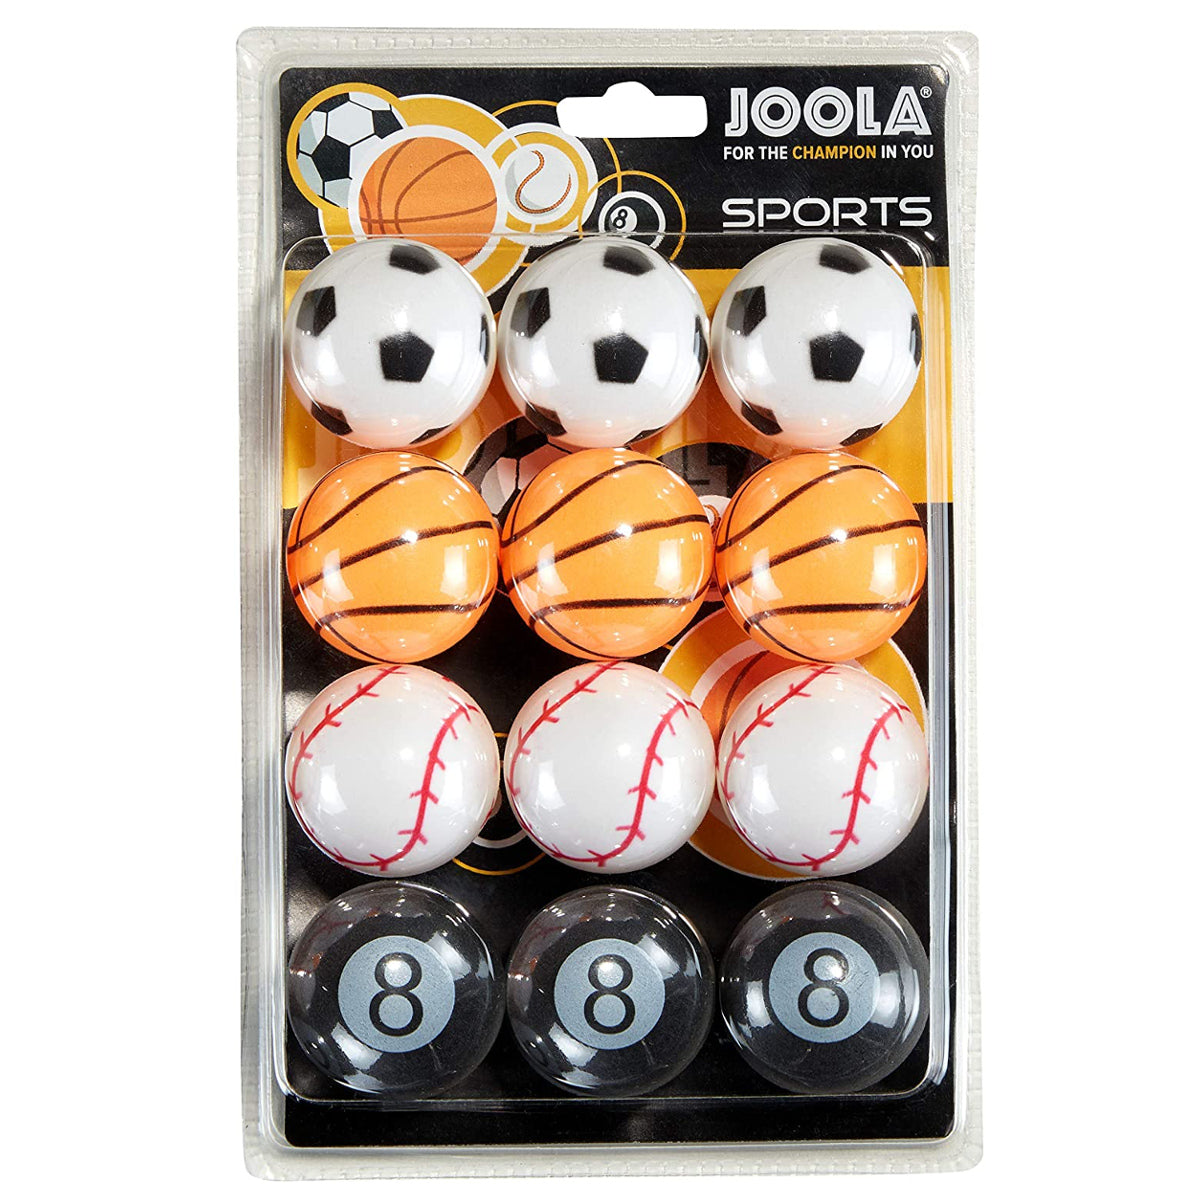 JOOLA Table Tennis Balls Sports Set (12 Pack)